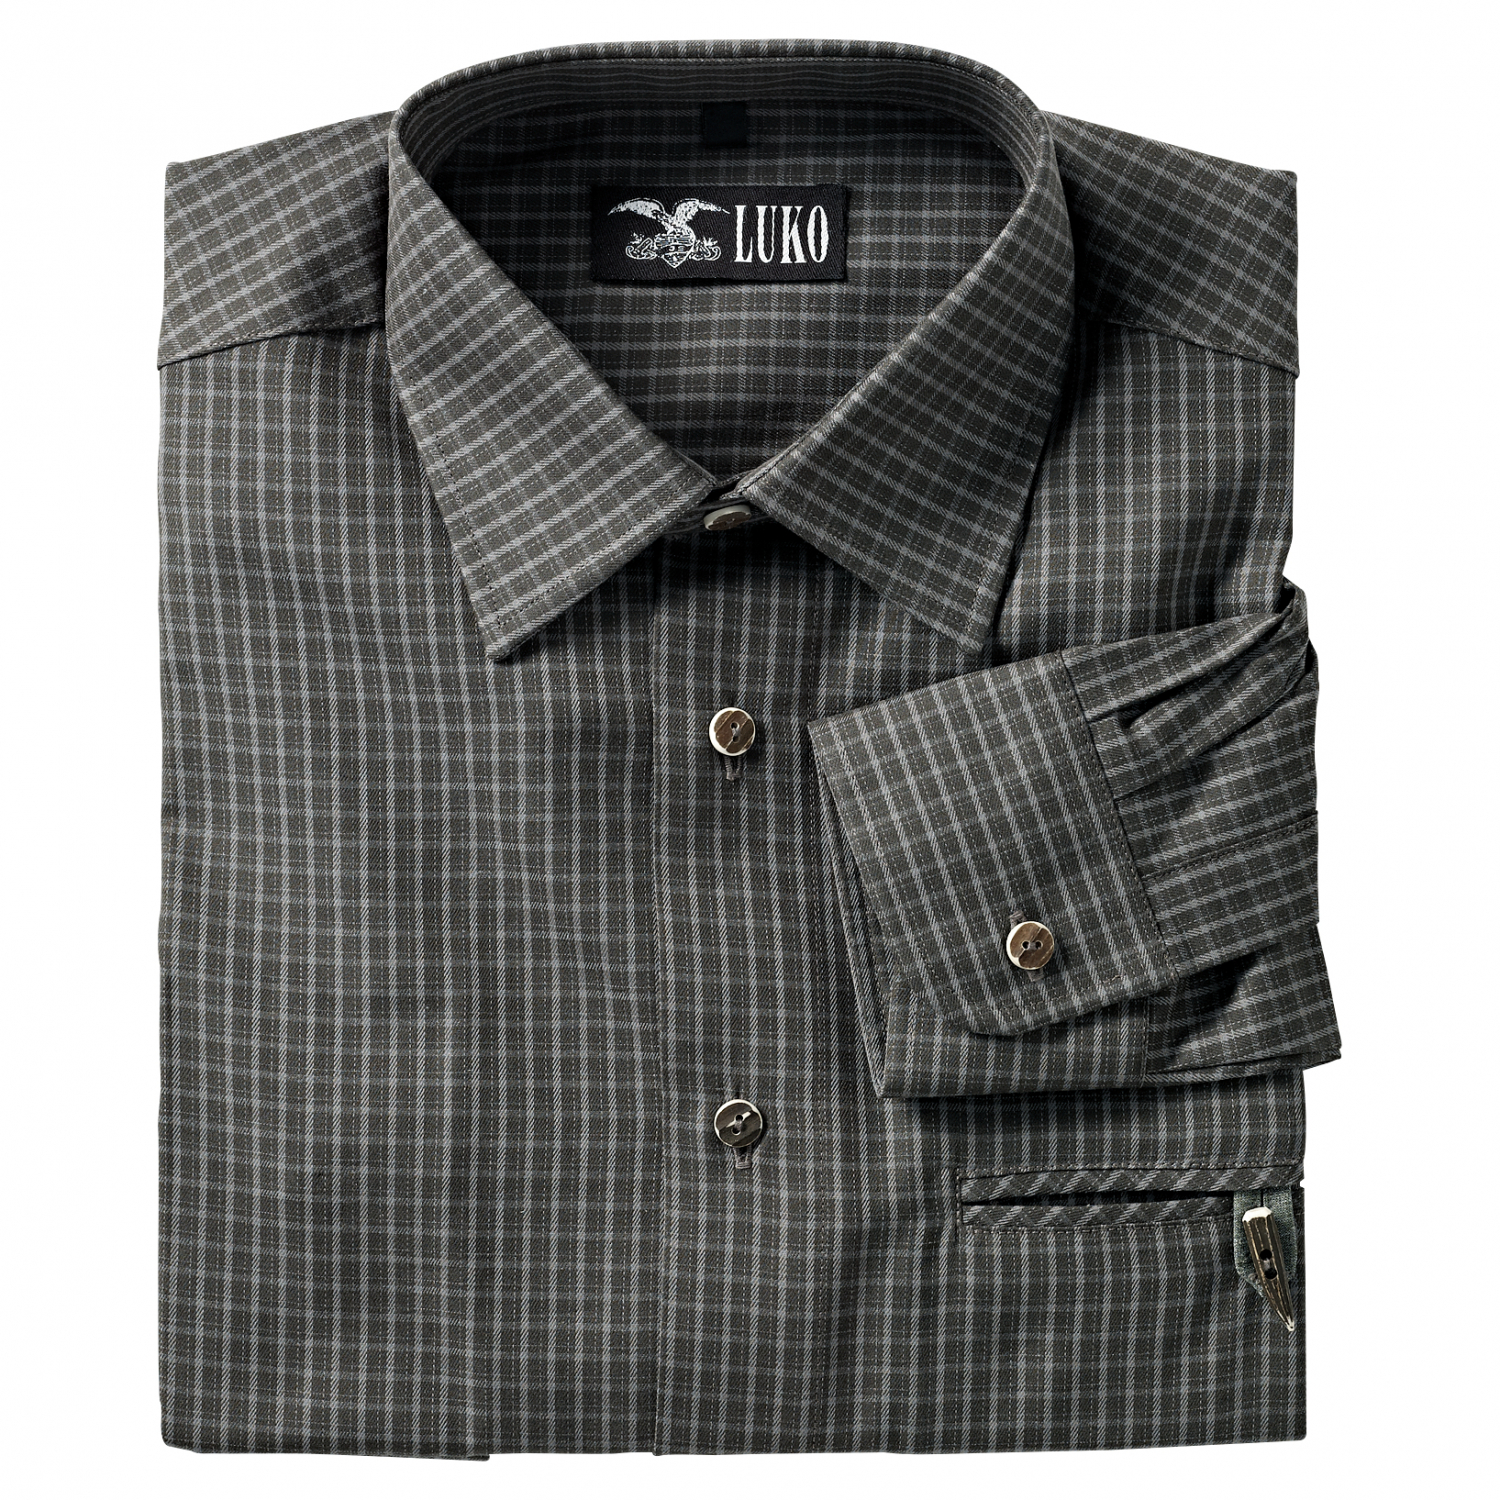 Luko Men's Shirt check (olive/grey) 